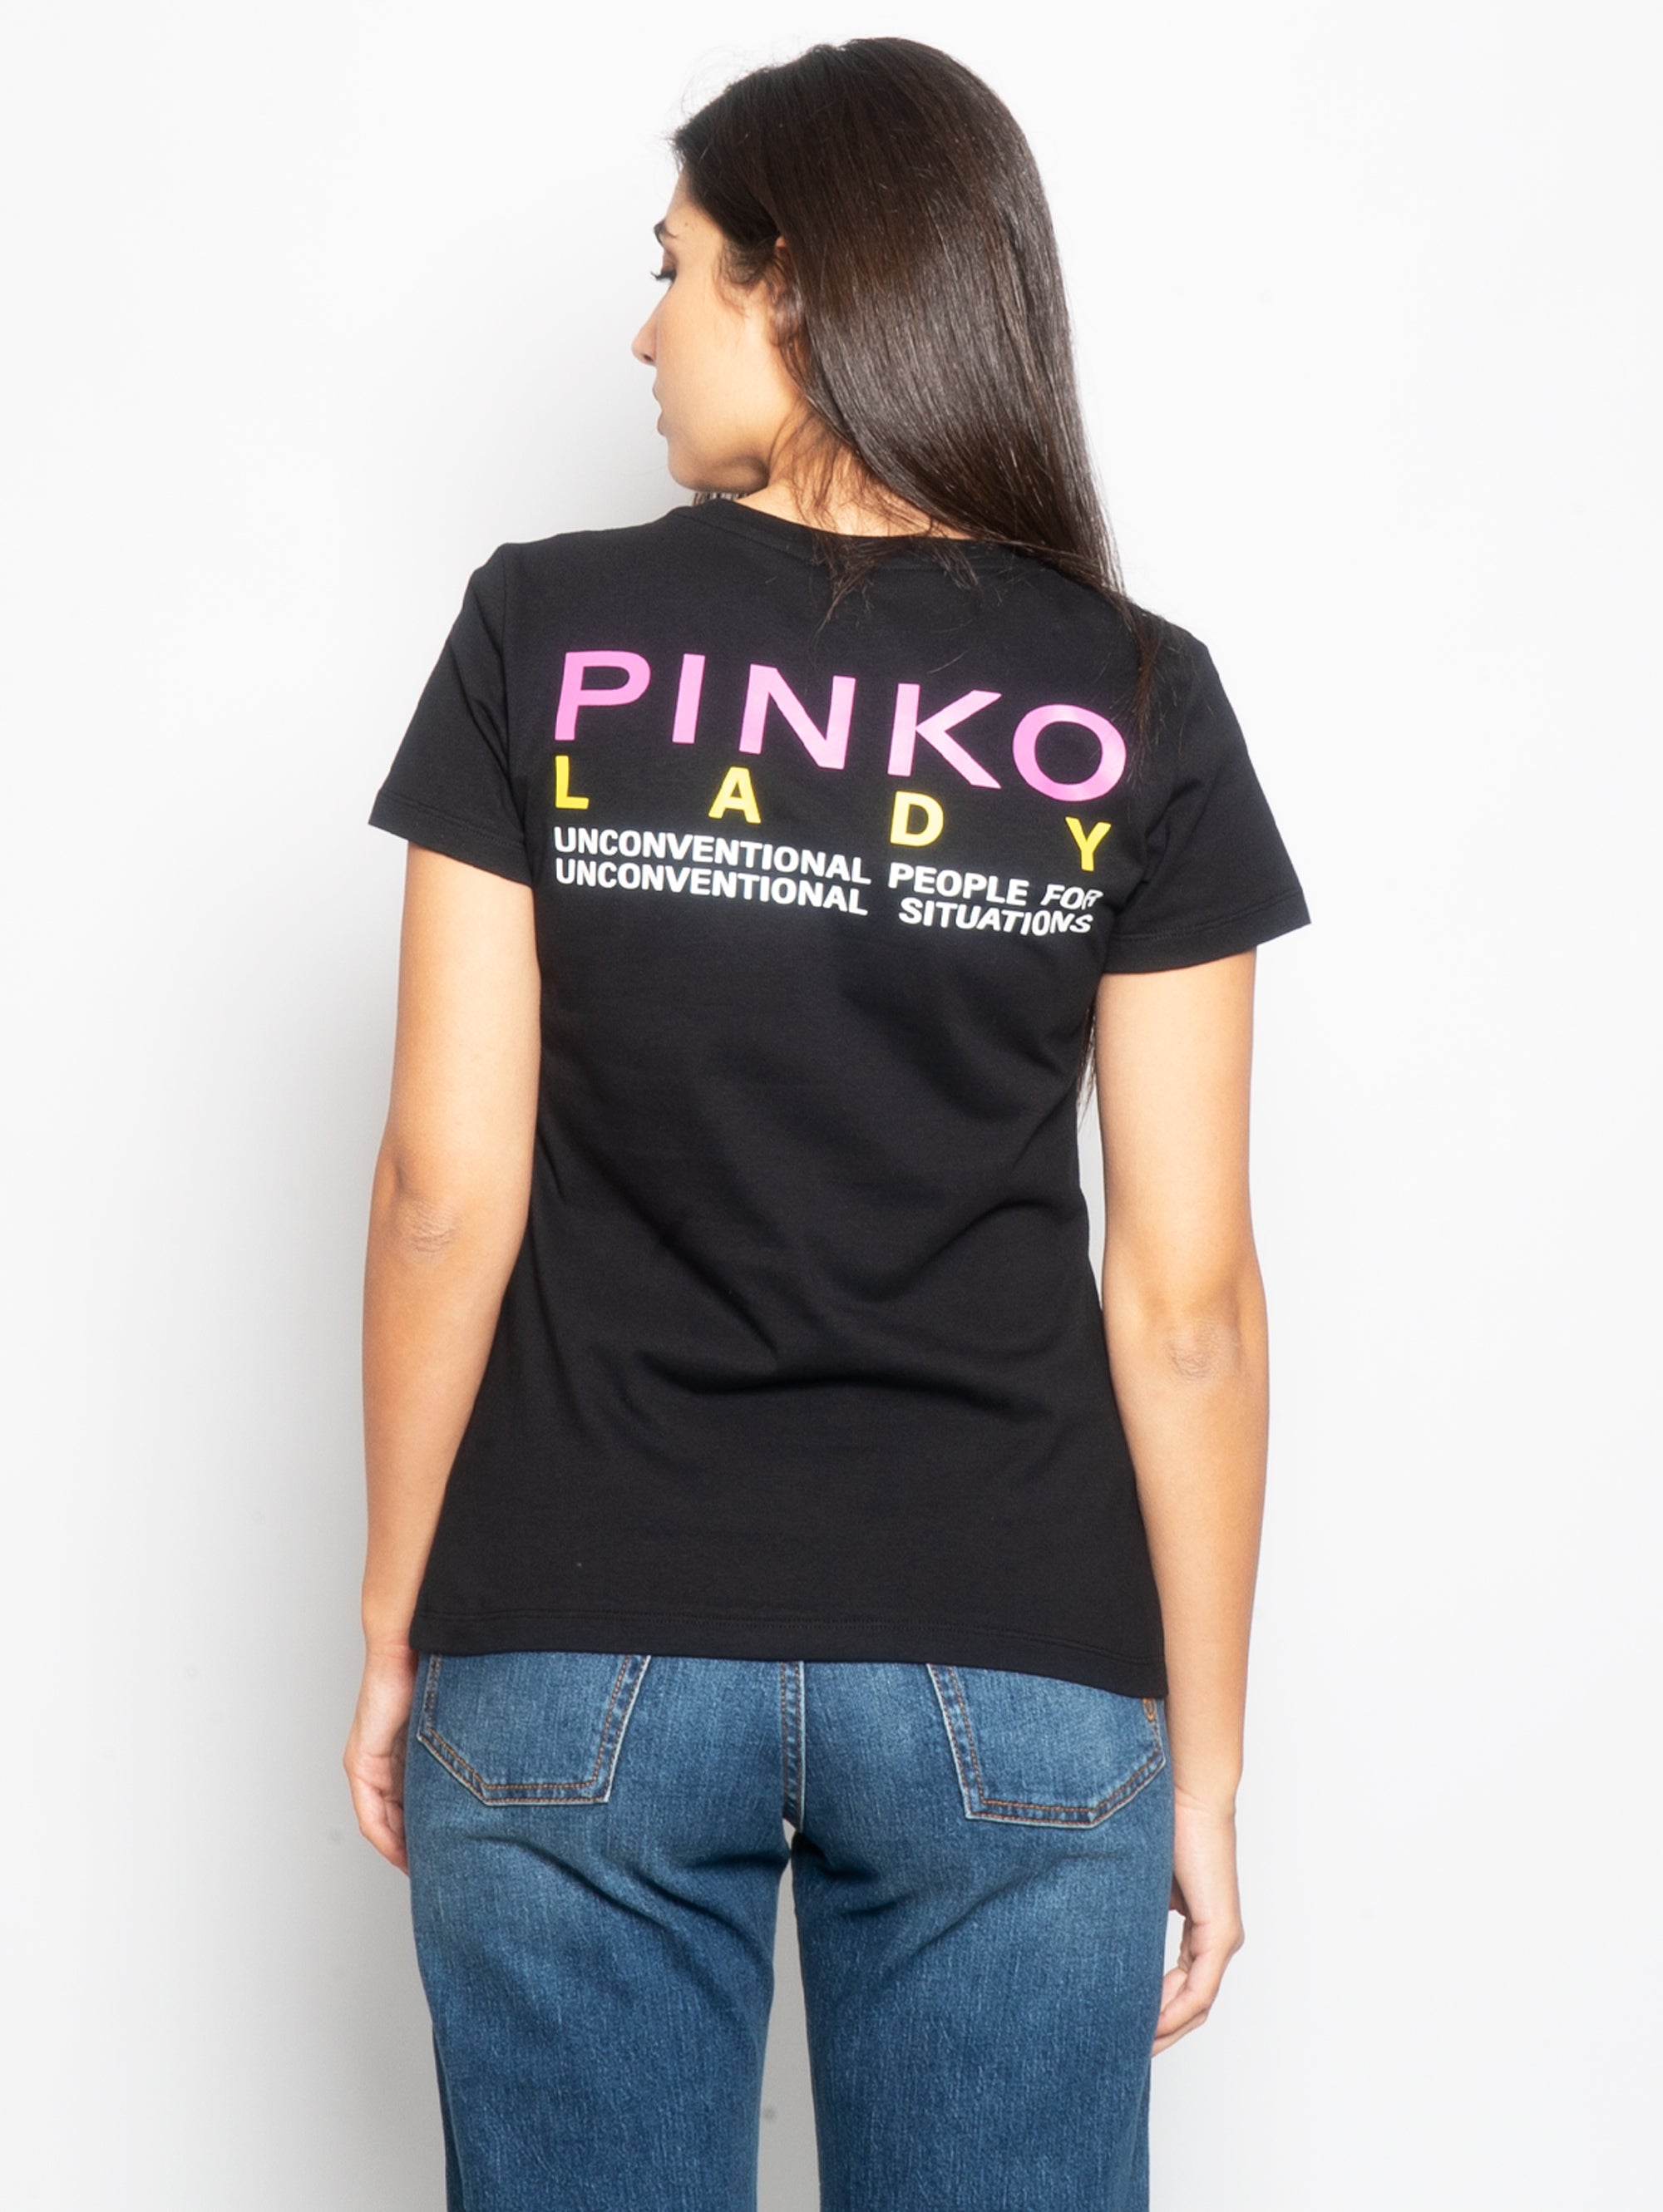 T-shirt with Pinko Lady Black Print